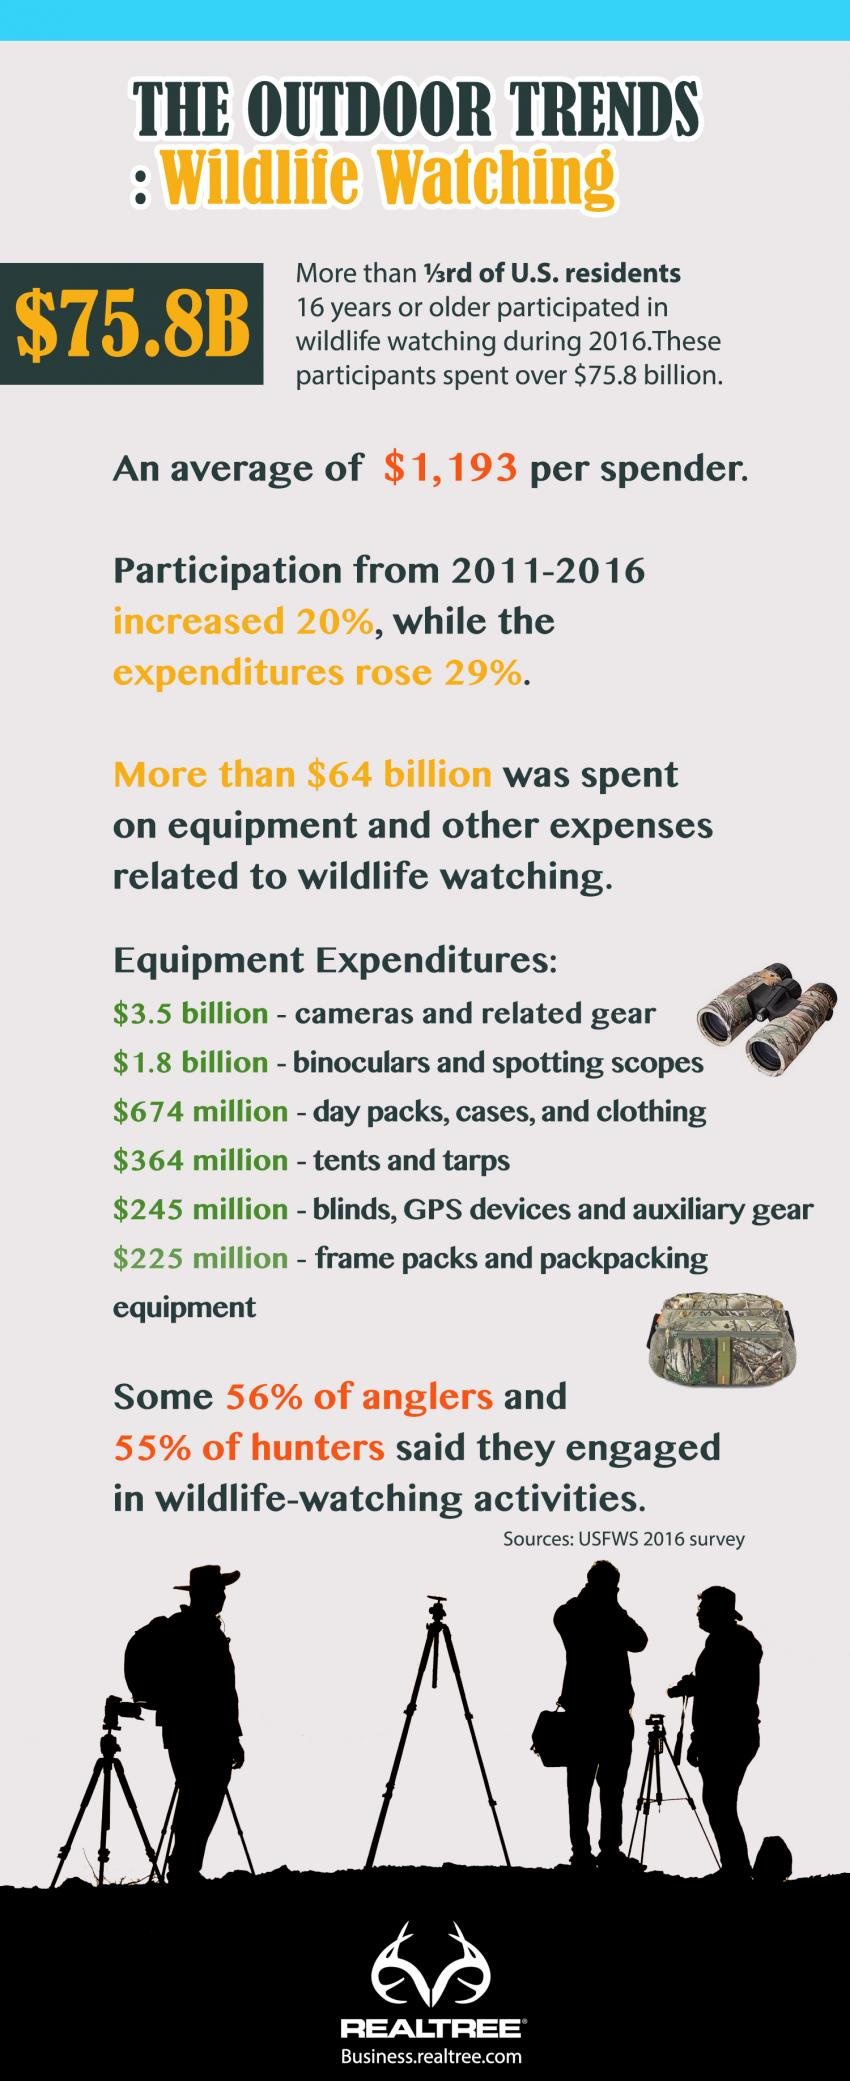 Wildlife Watching Expenditure Report 2017 | Realtree B2B